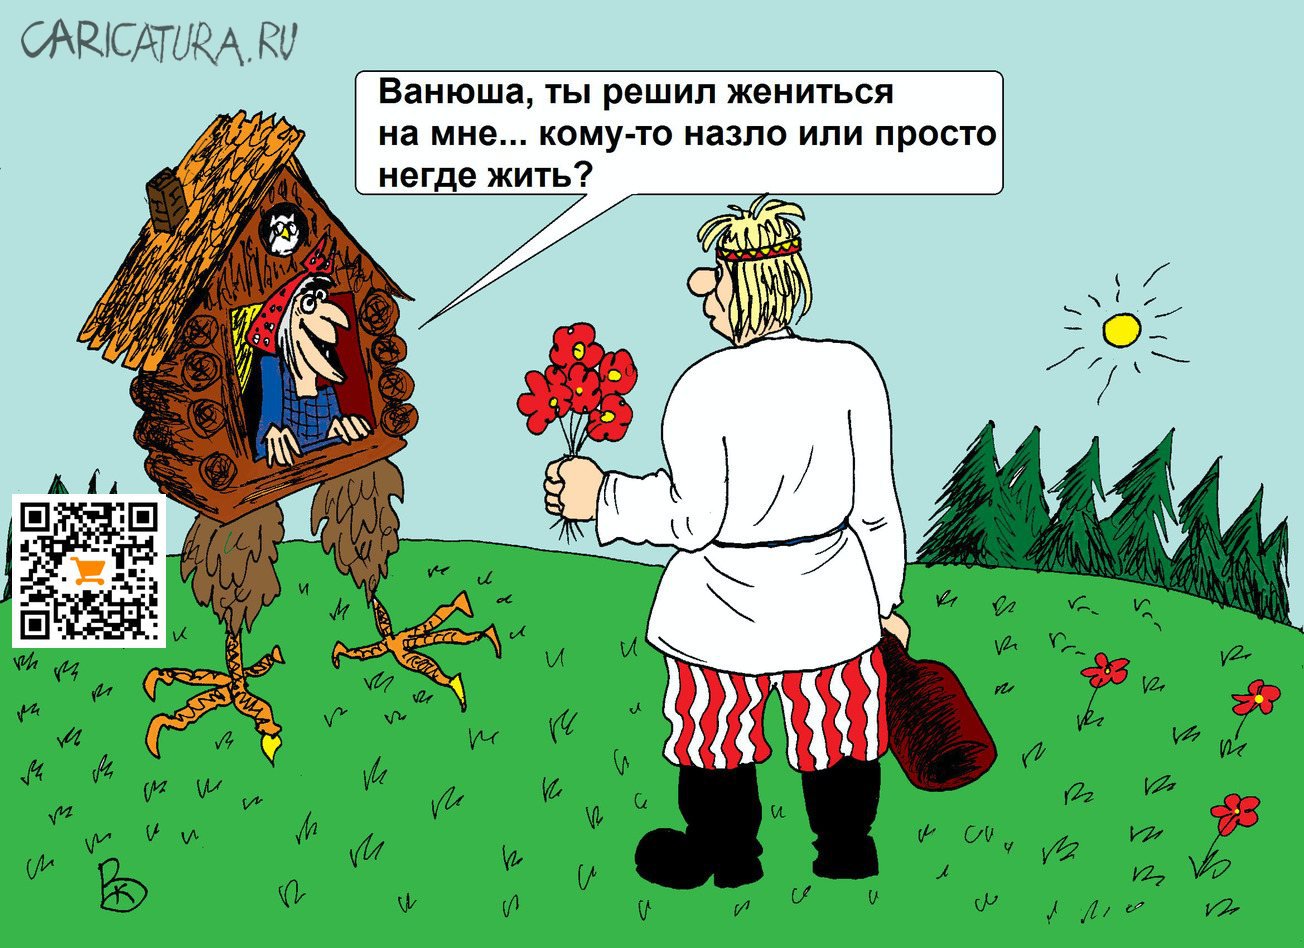 Карикатура "Предложение", Валерий Каненков